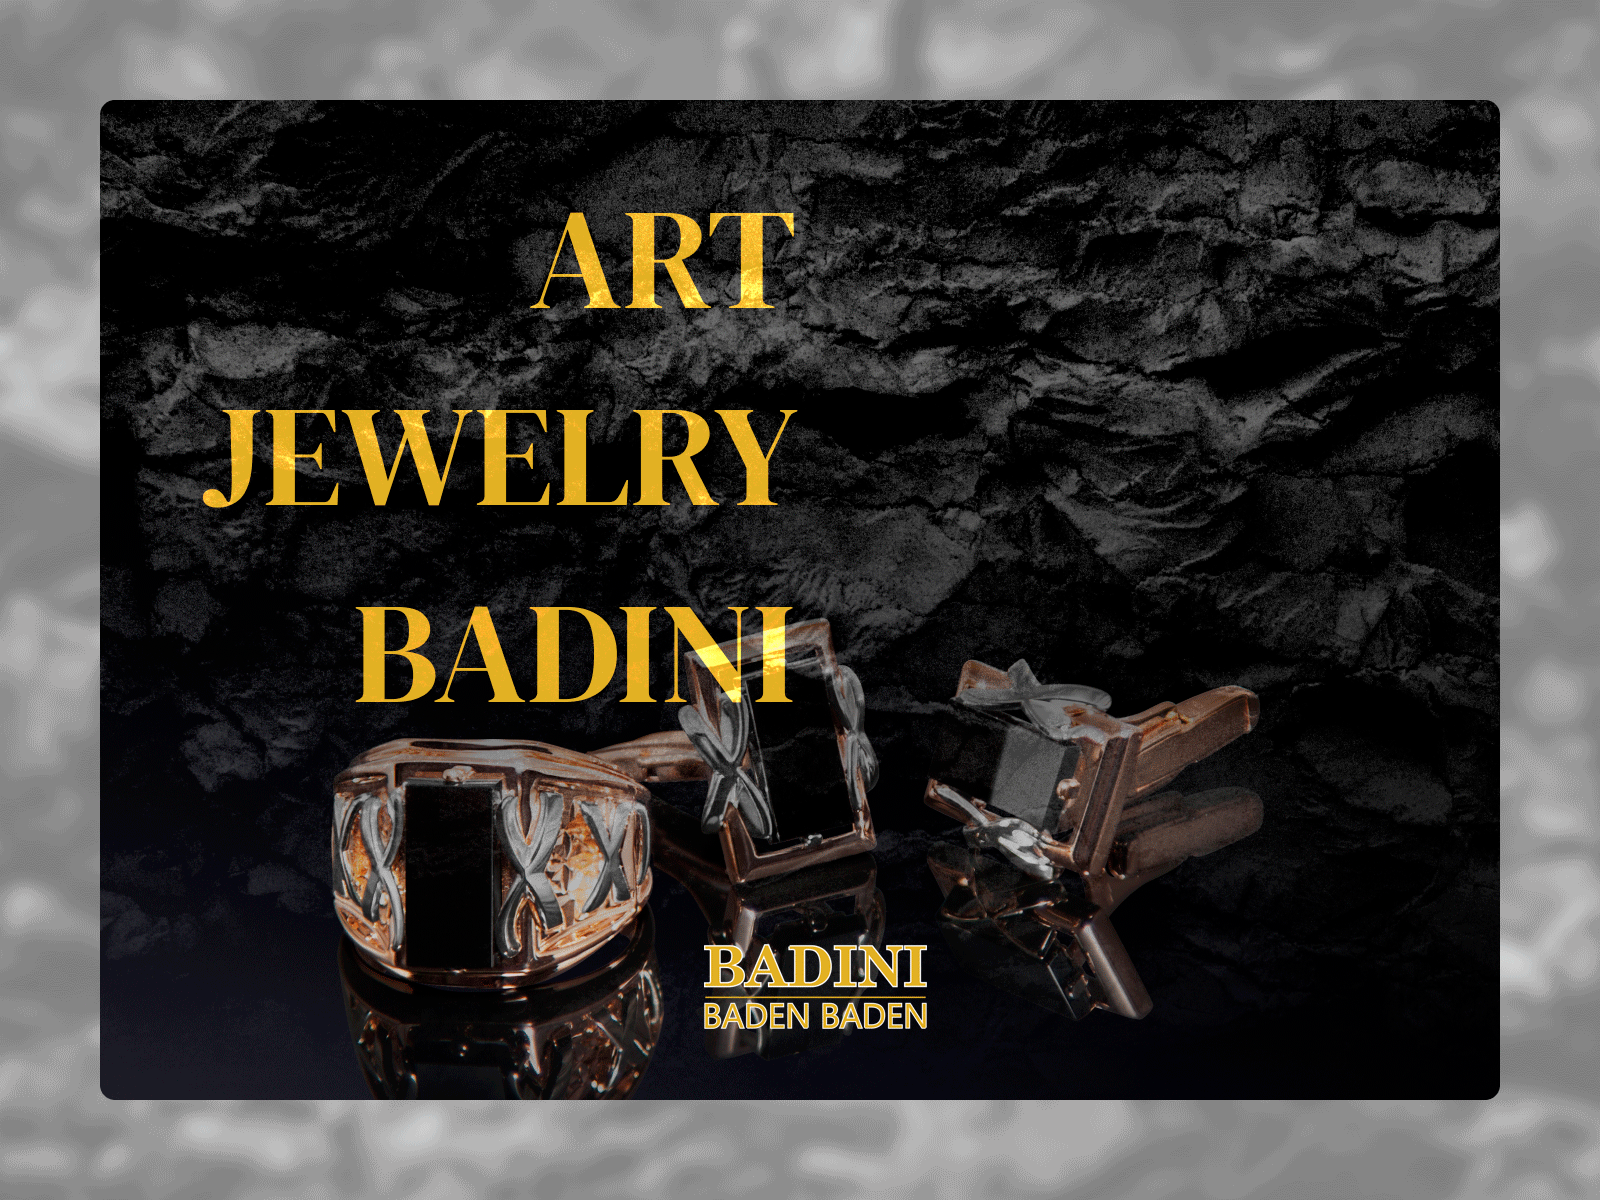 "Badini Baden Baden" jewerly art